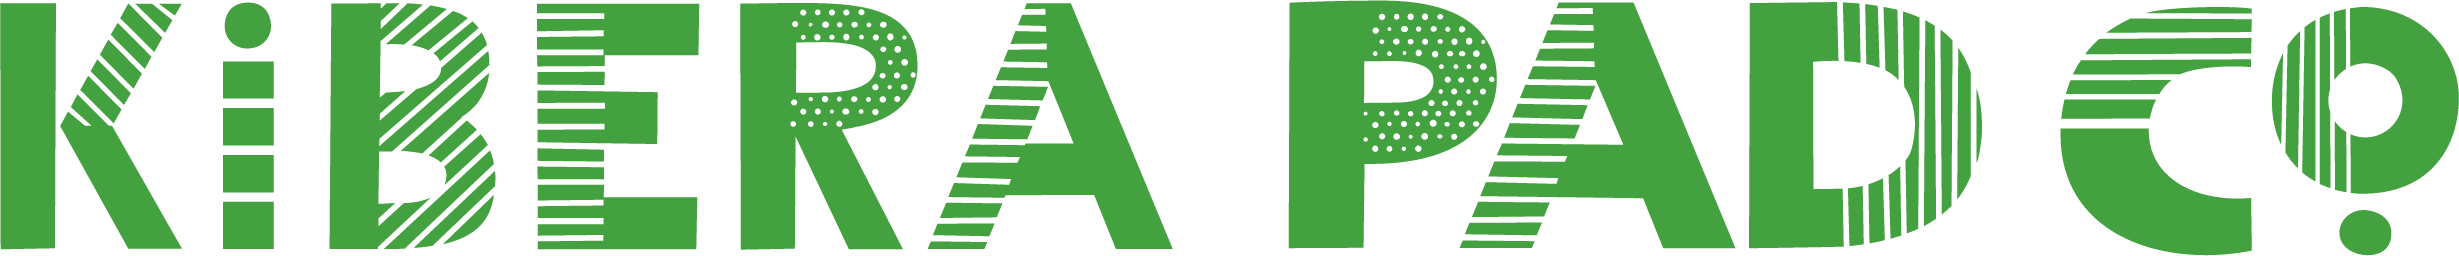 The LJA Foundation Ltd. logo